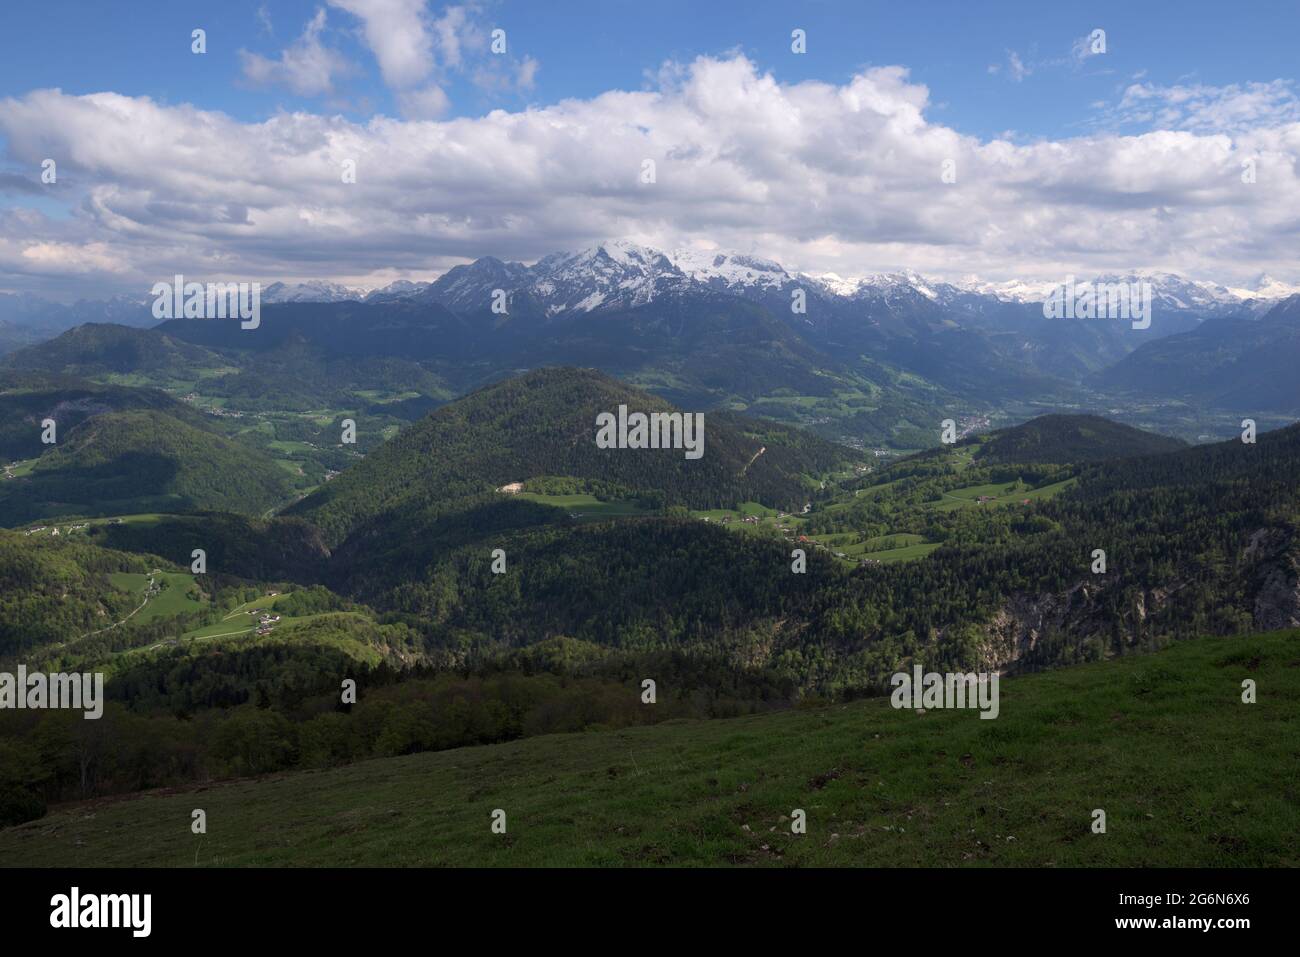 Vista panorámica de montaña con Kehlstein, Hoher Göll, Hohes Brett y otros vistos desde la cabaña de montaña Scheibenalm, Berchtesgaden, Baviera, Alemania Foto de stock